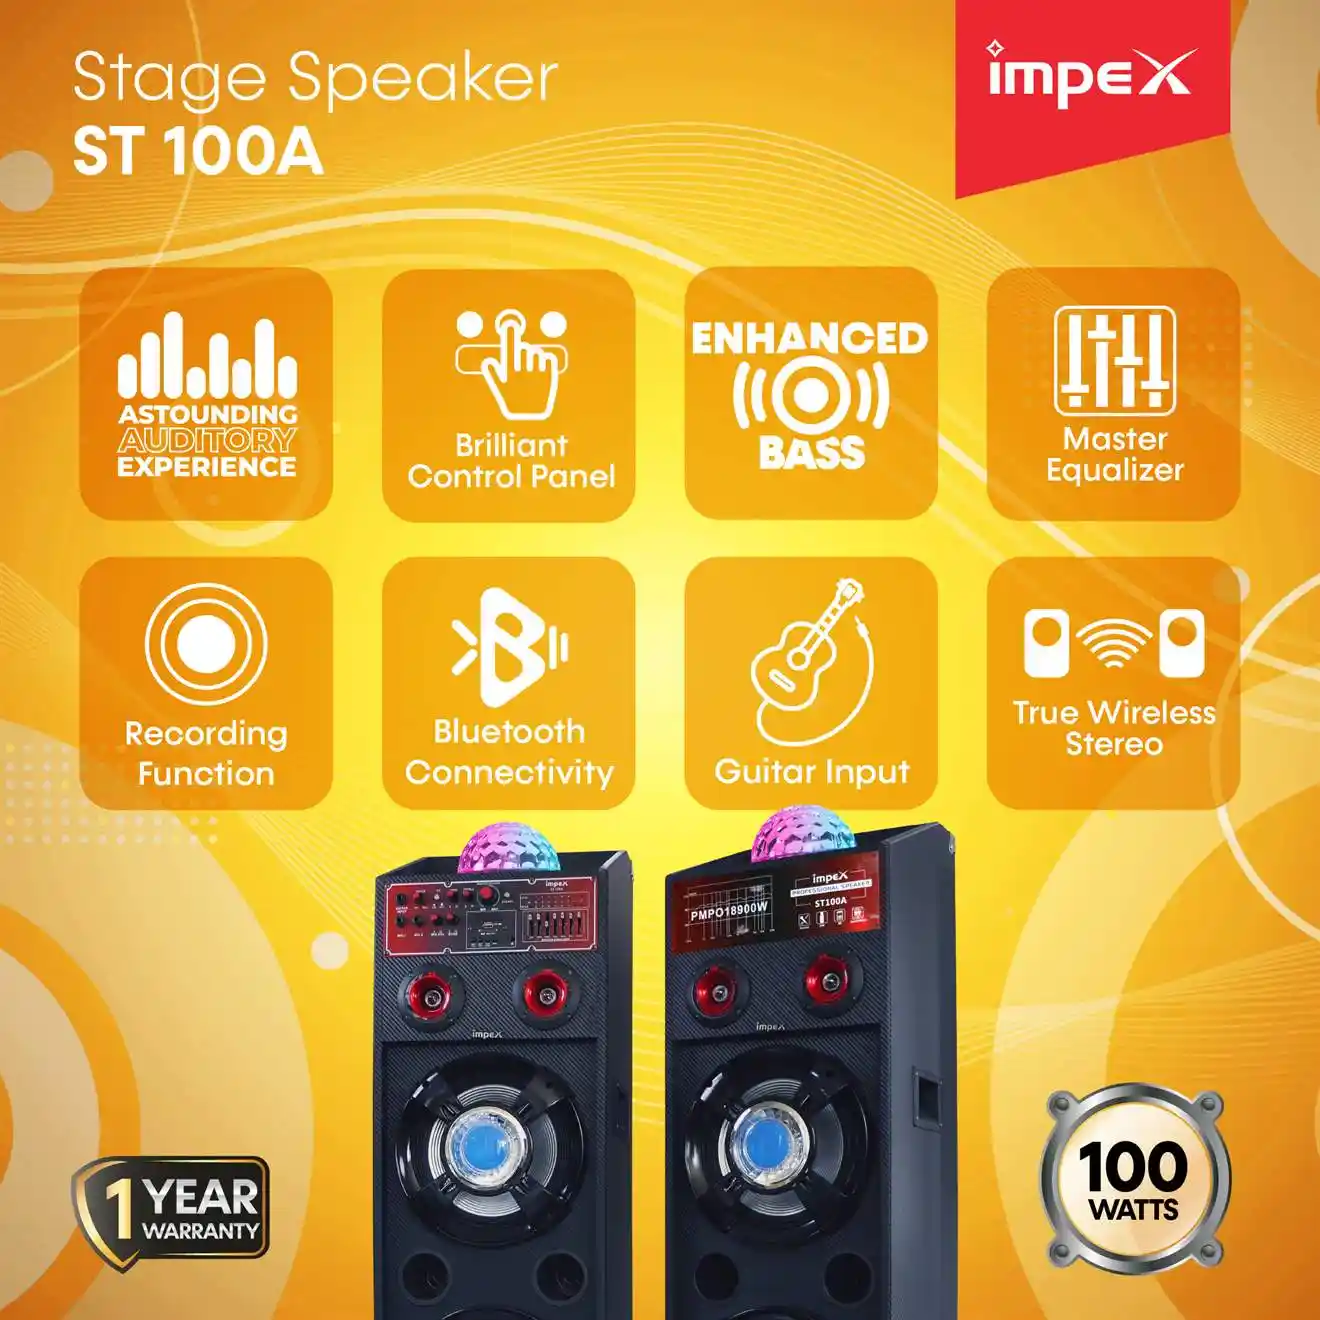 Stage Speaker | ST 100A